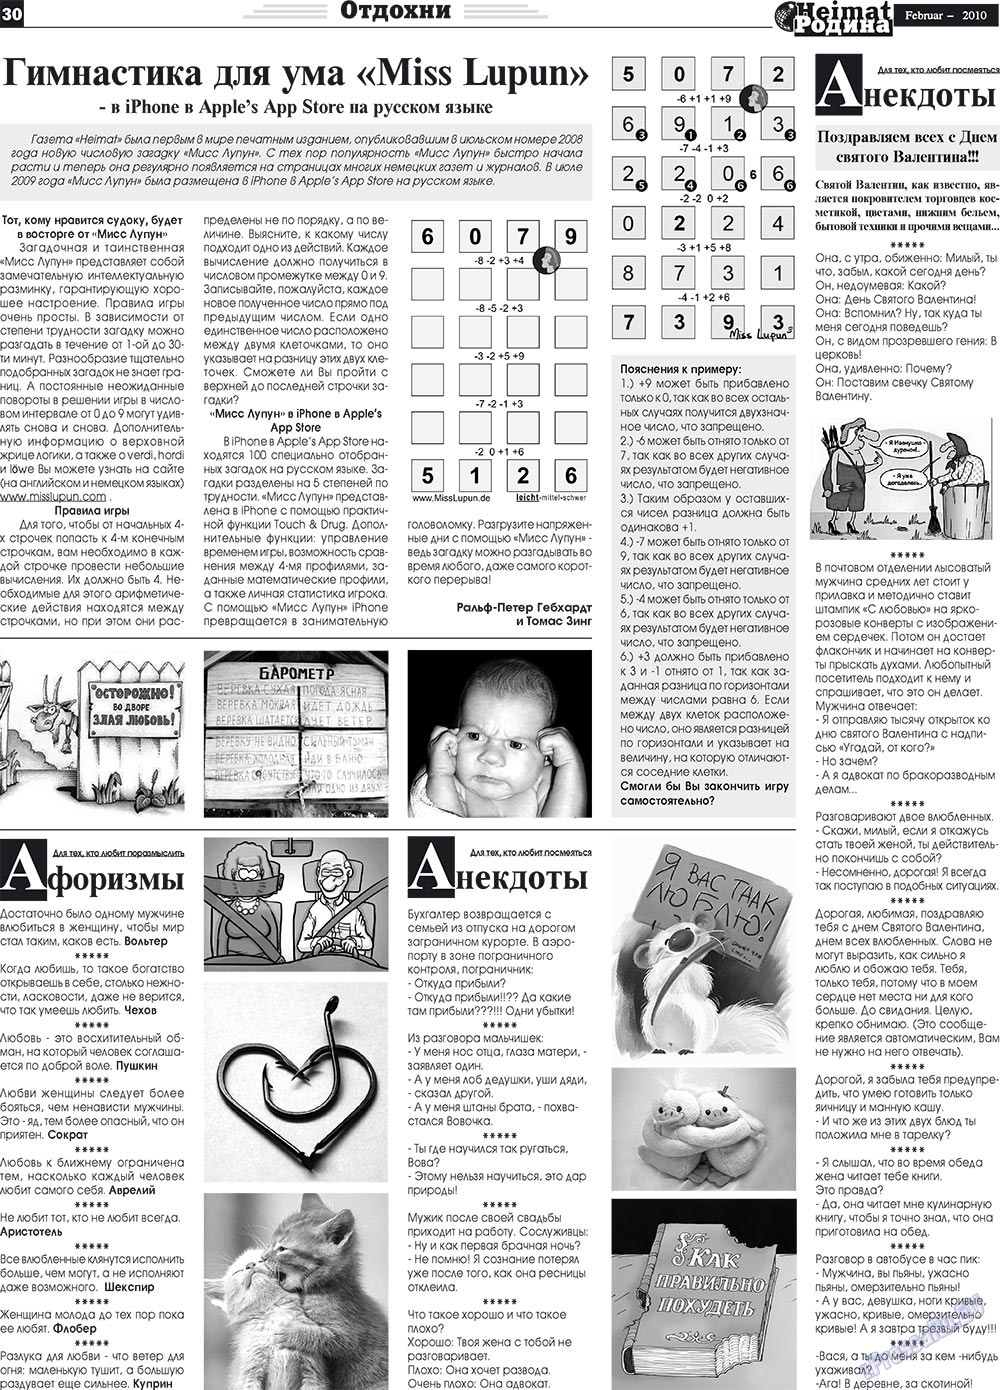 Heimat-Родина, газета. 2010 №2 стр.30